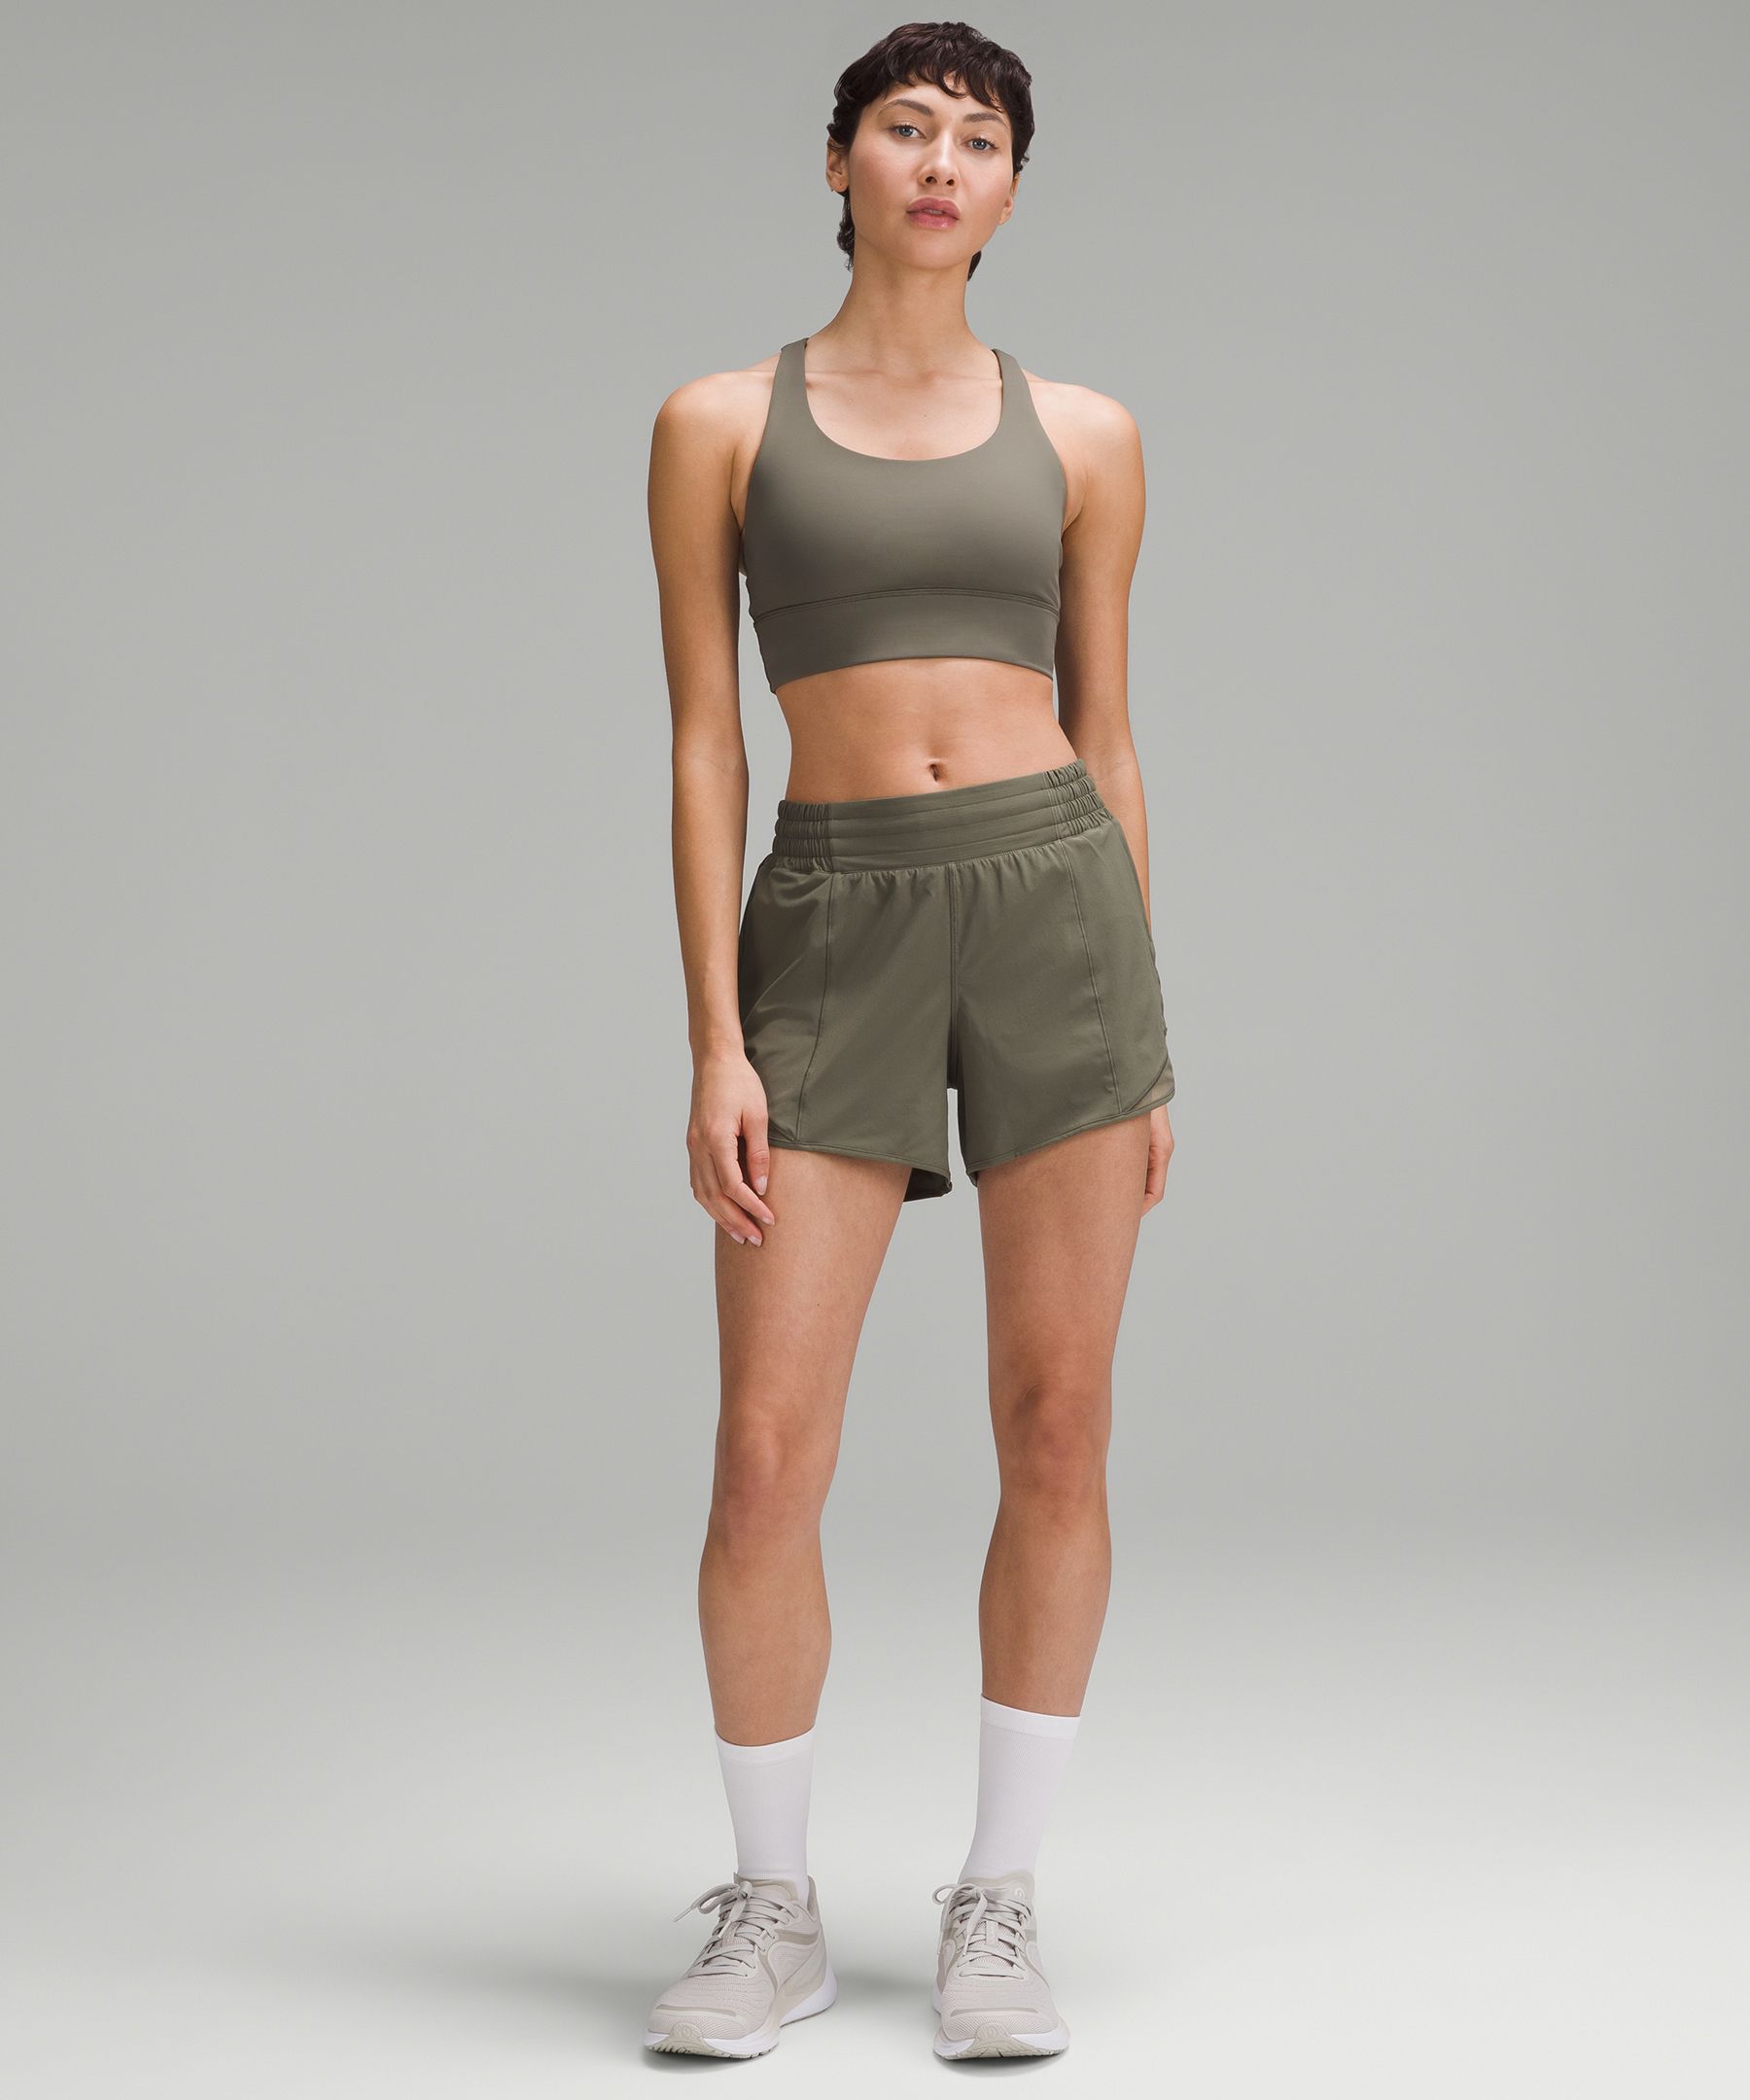 Lululemon shorts size XXL 8 inch inseam like new! in 2023